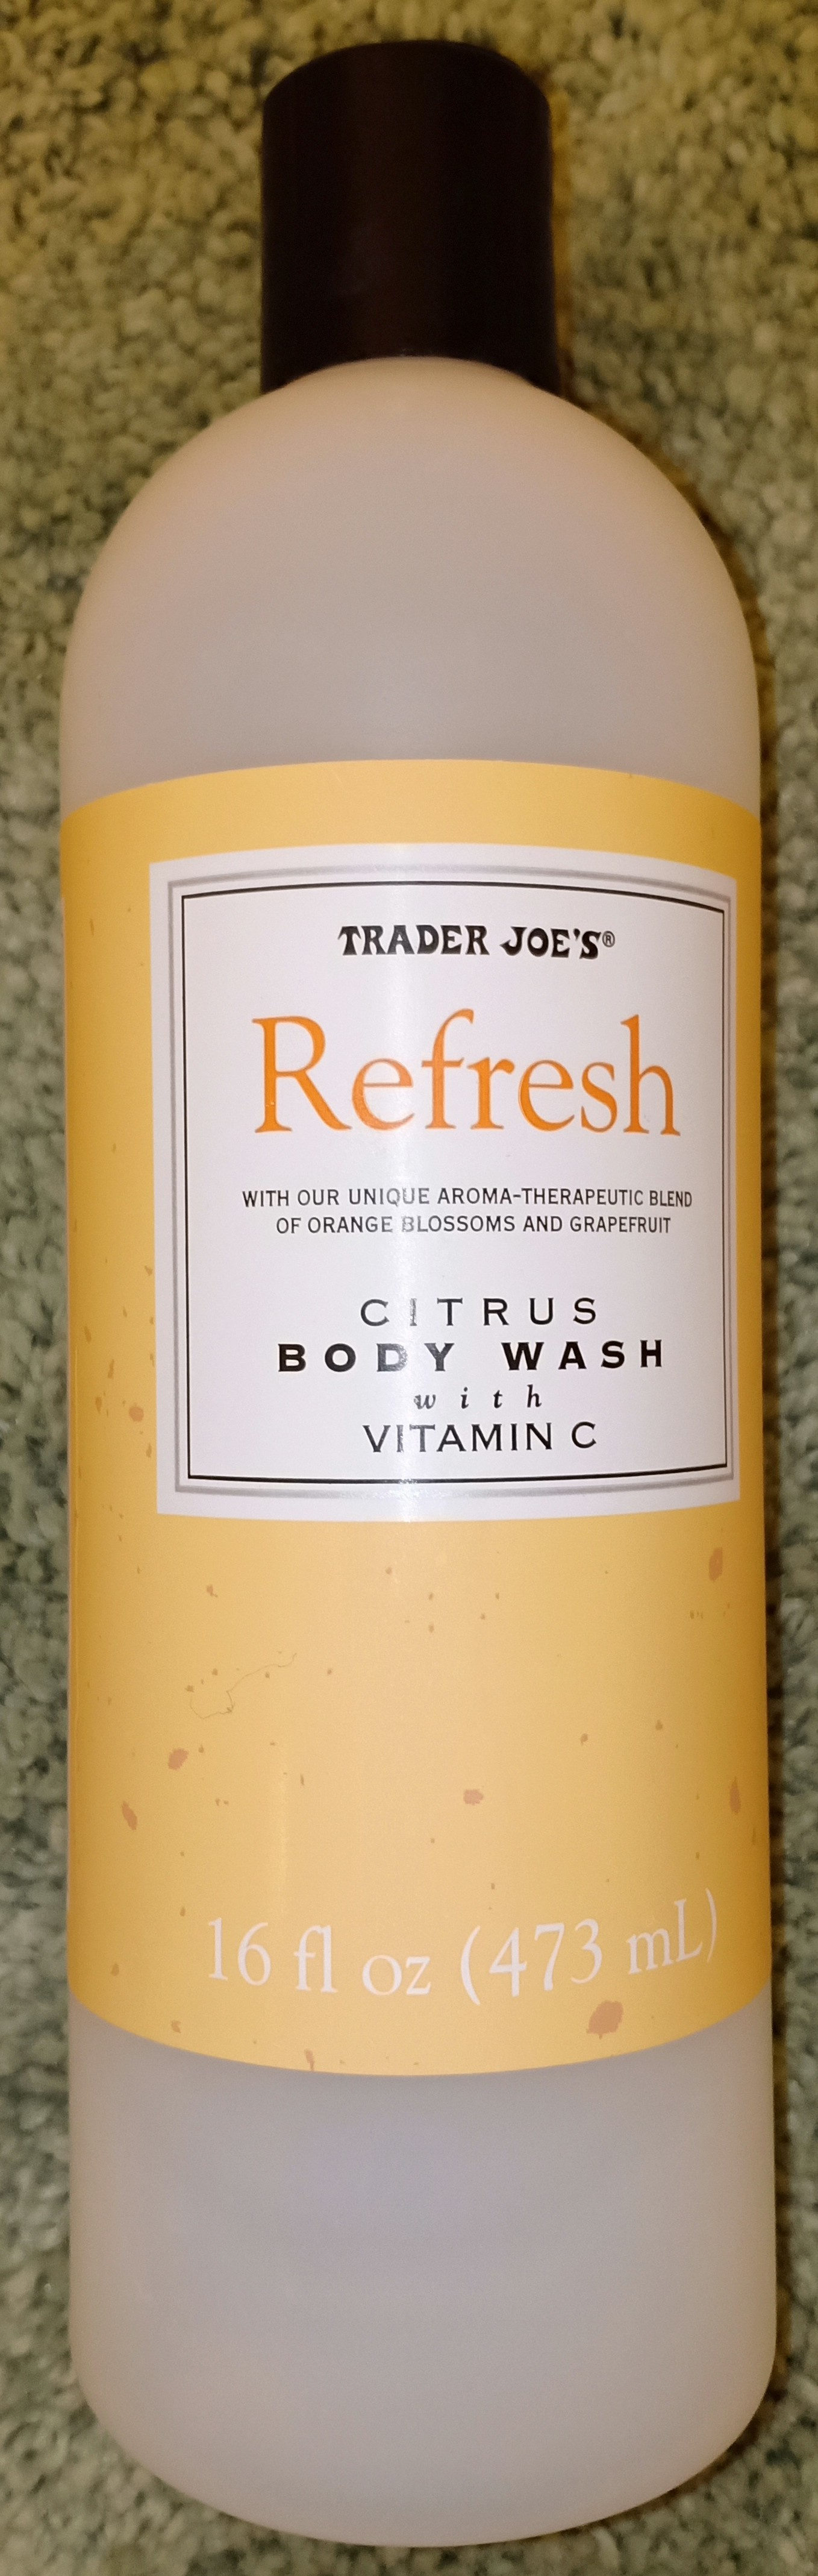 citrus body wash - Produkt - en